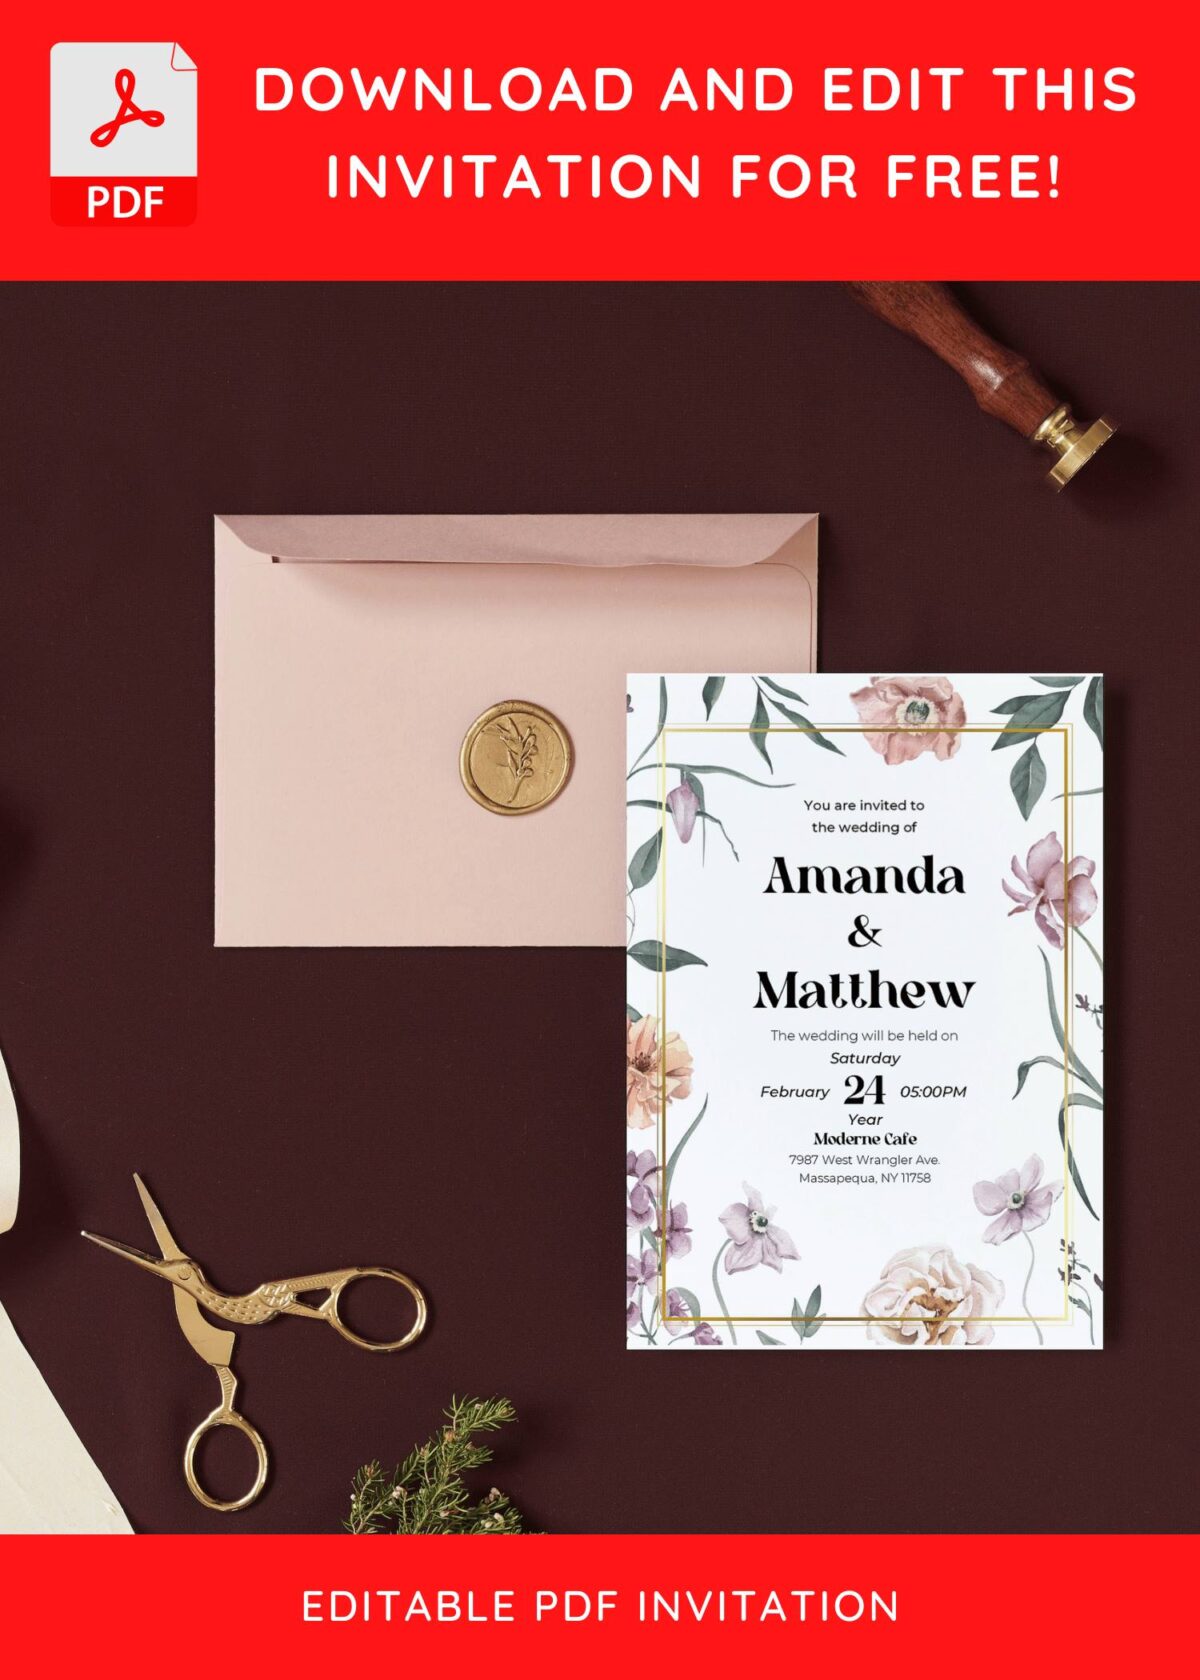 (Free Editable PDF) Geometric Wildflower Wedding Invitation Templates I